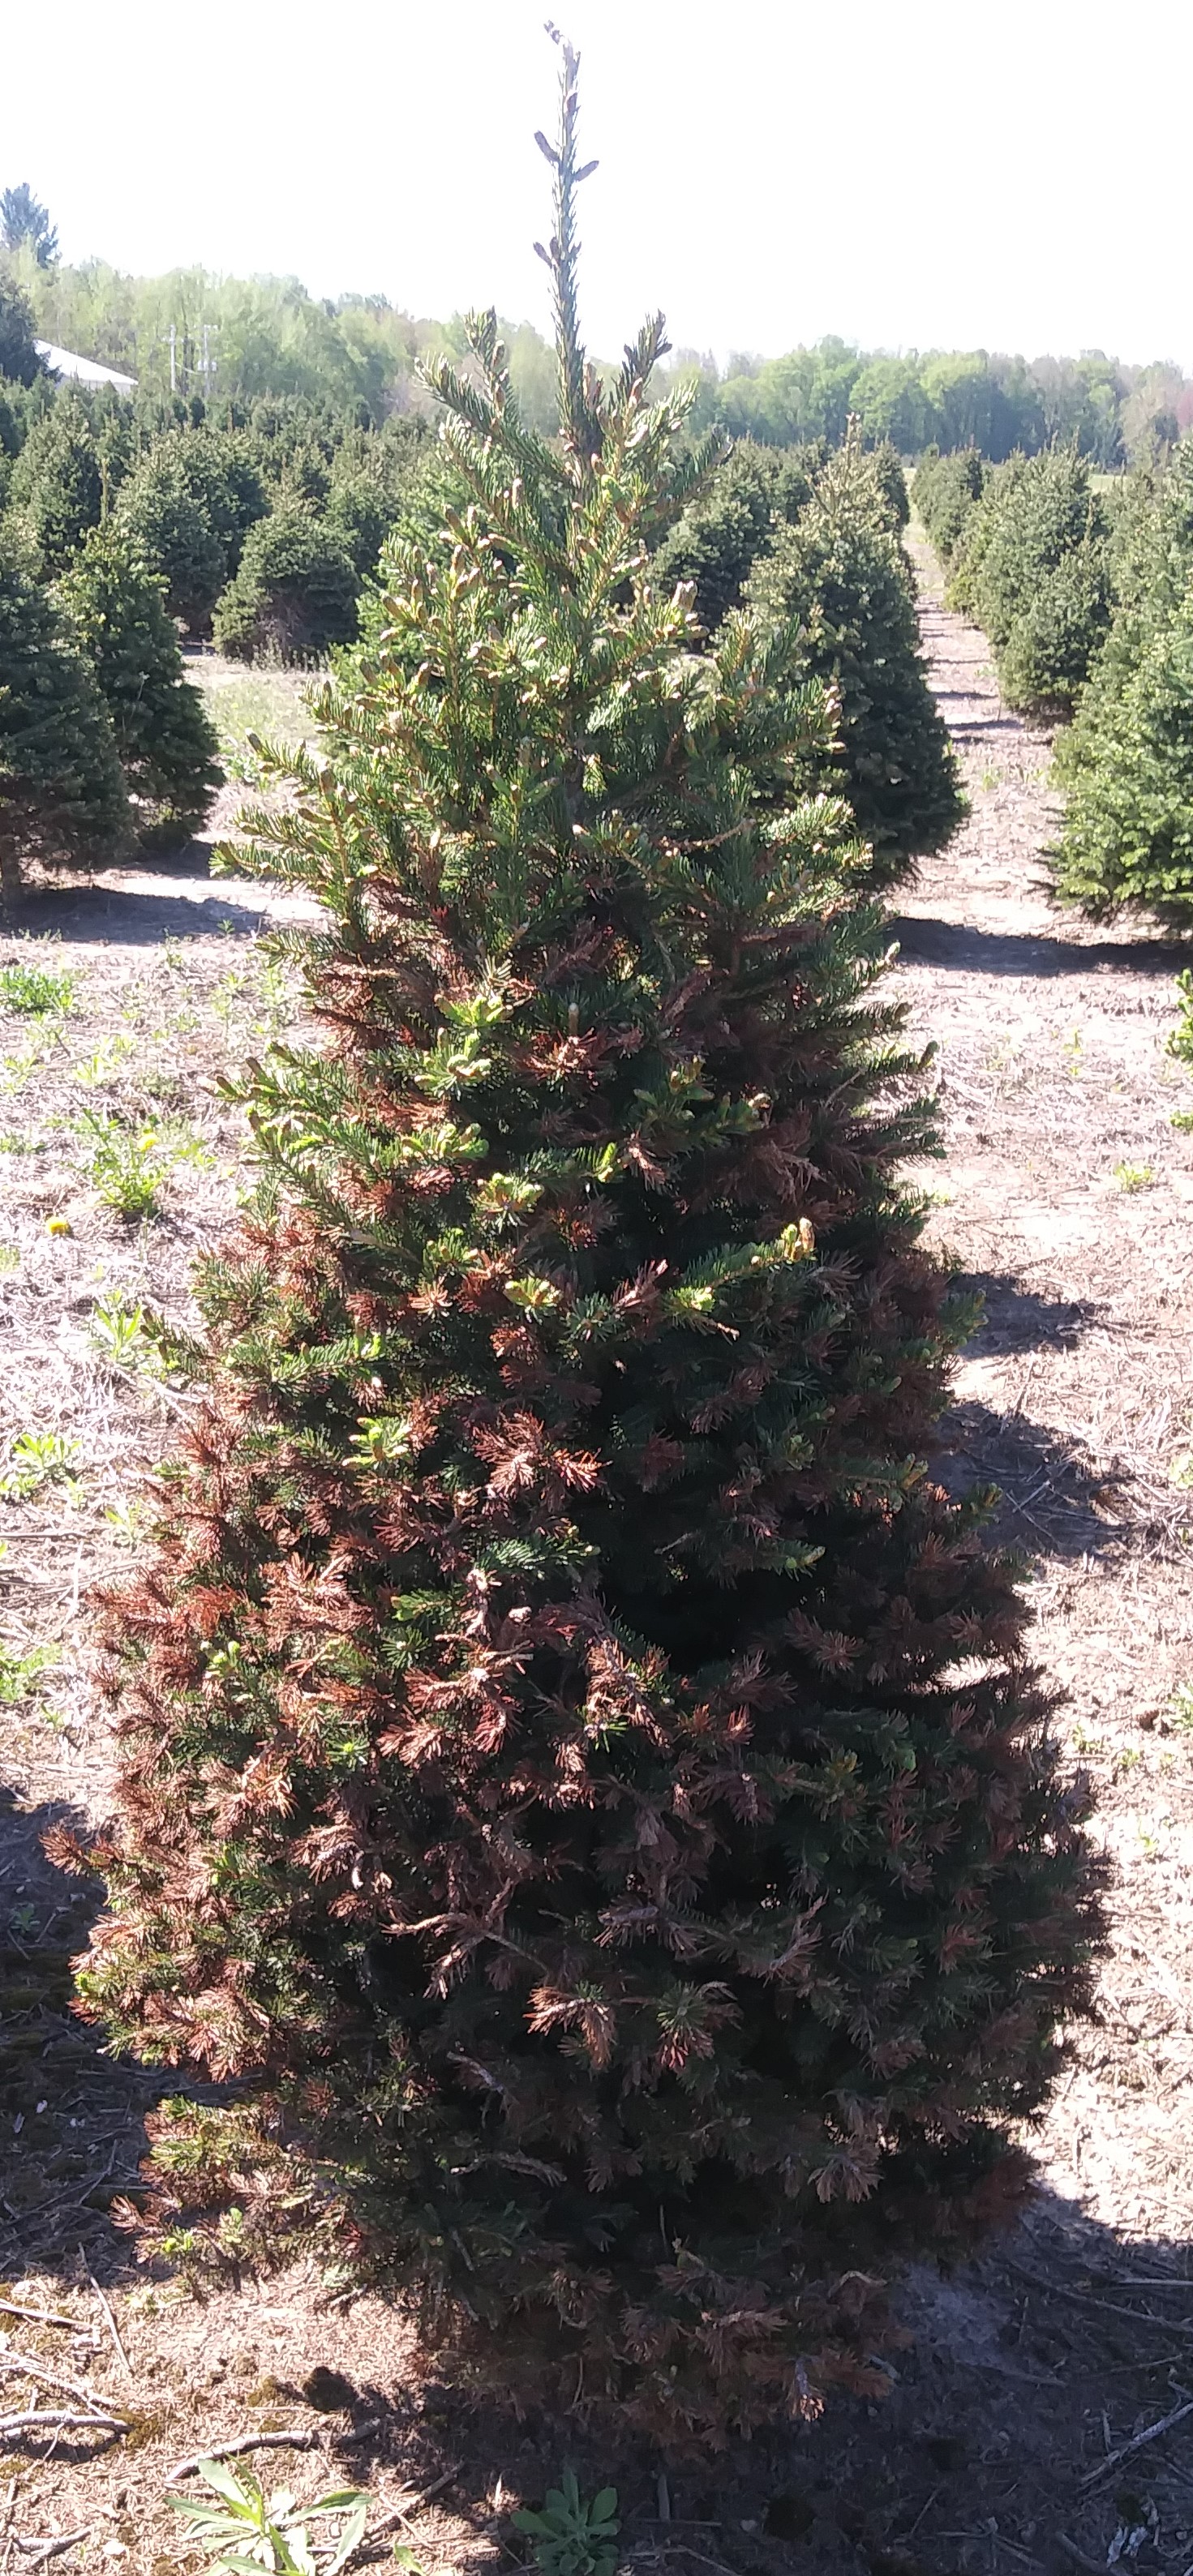 Spruce Gall Midge infested tree